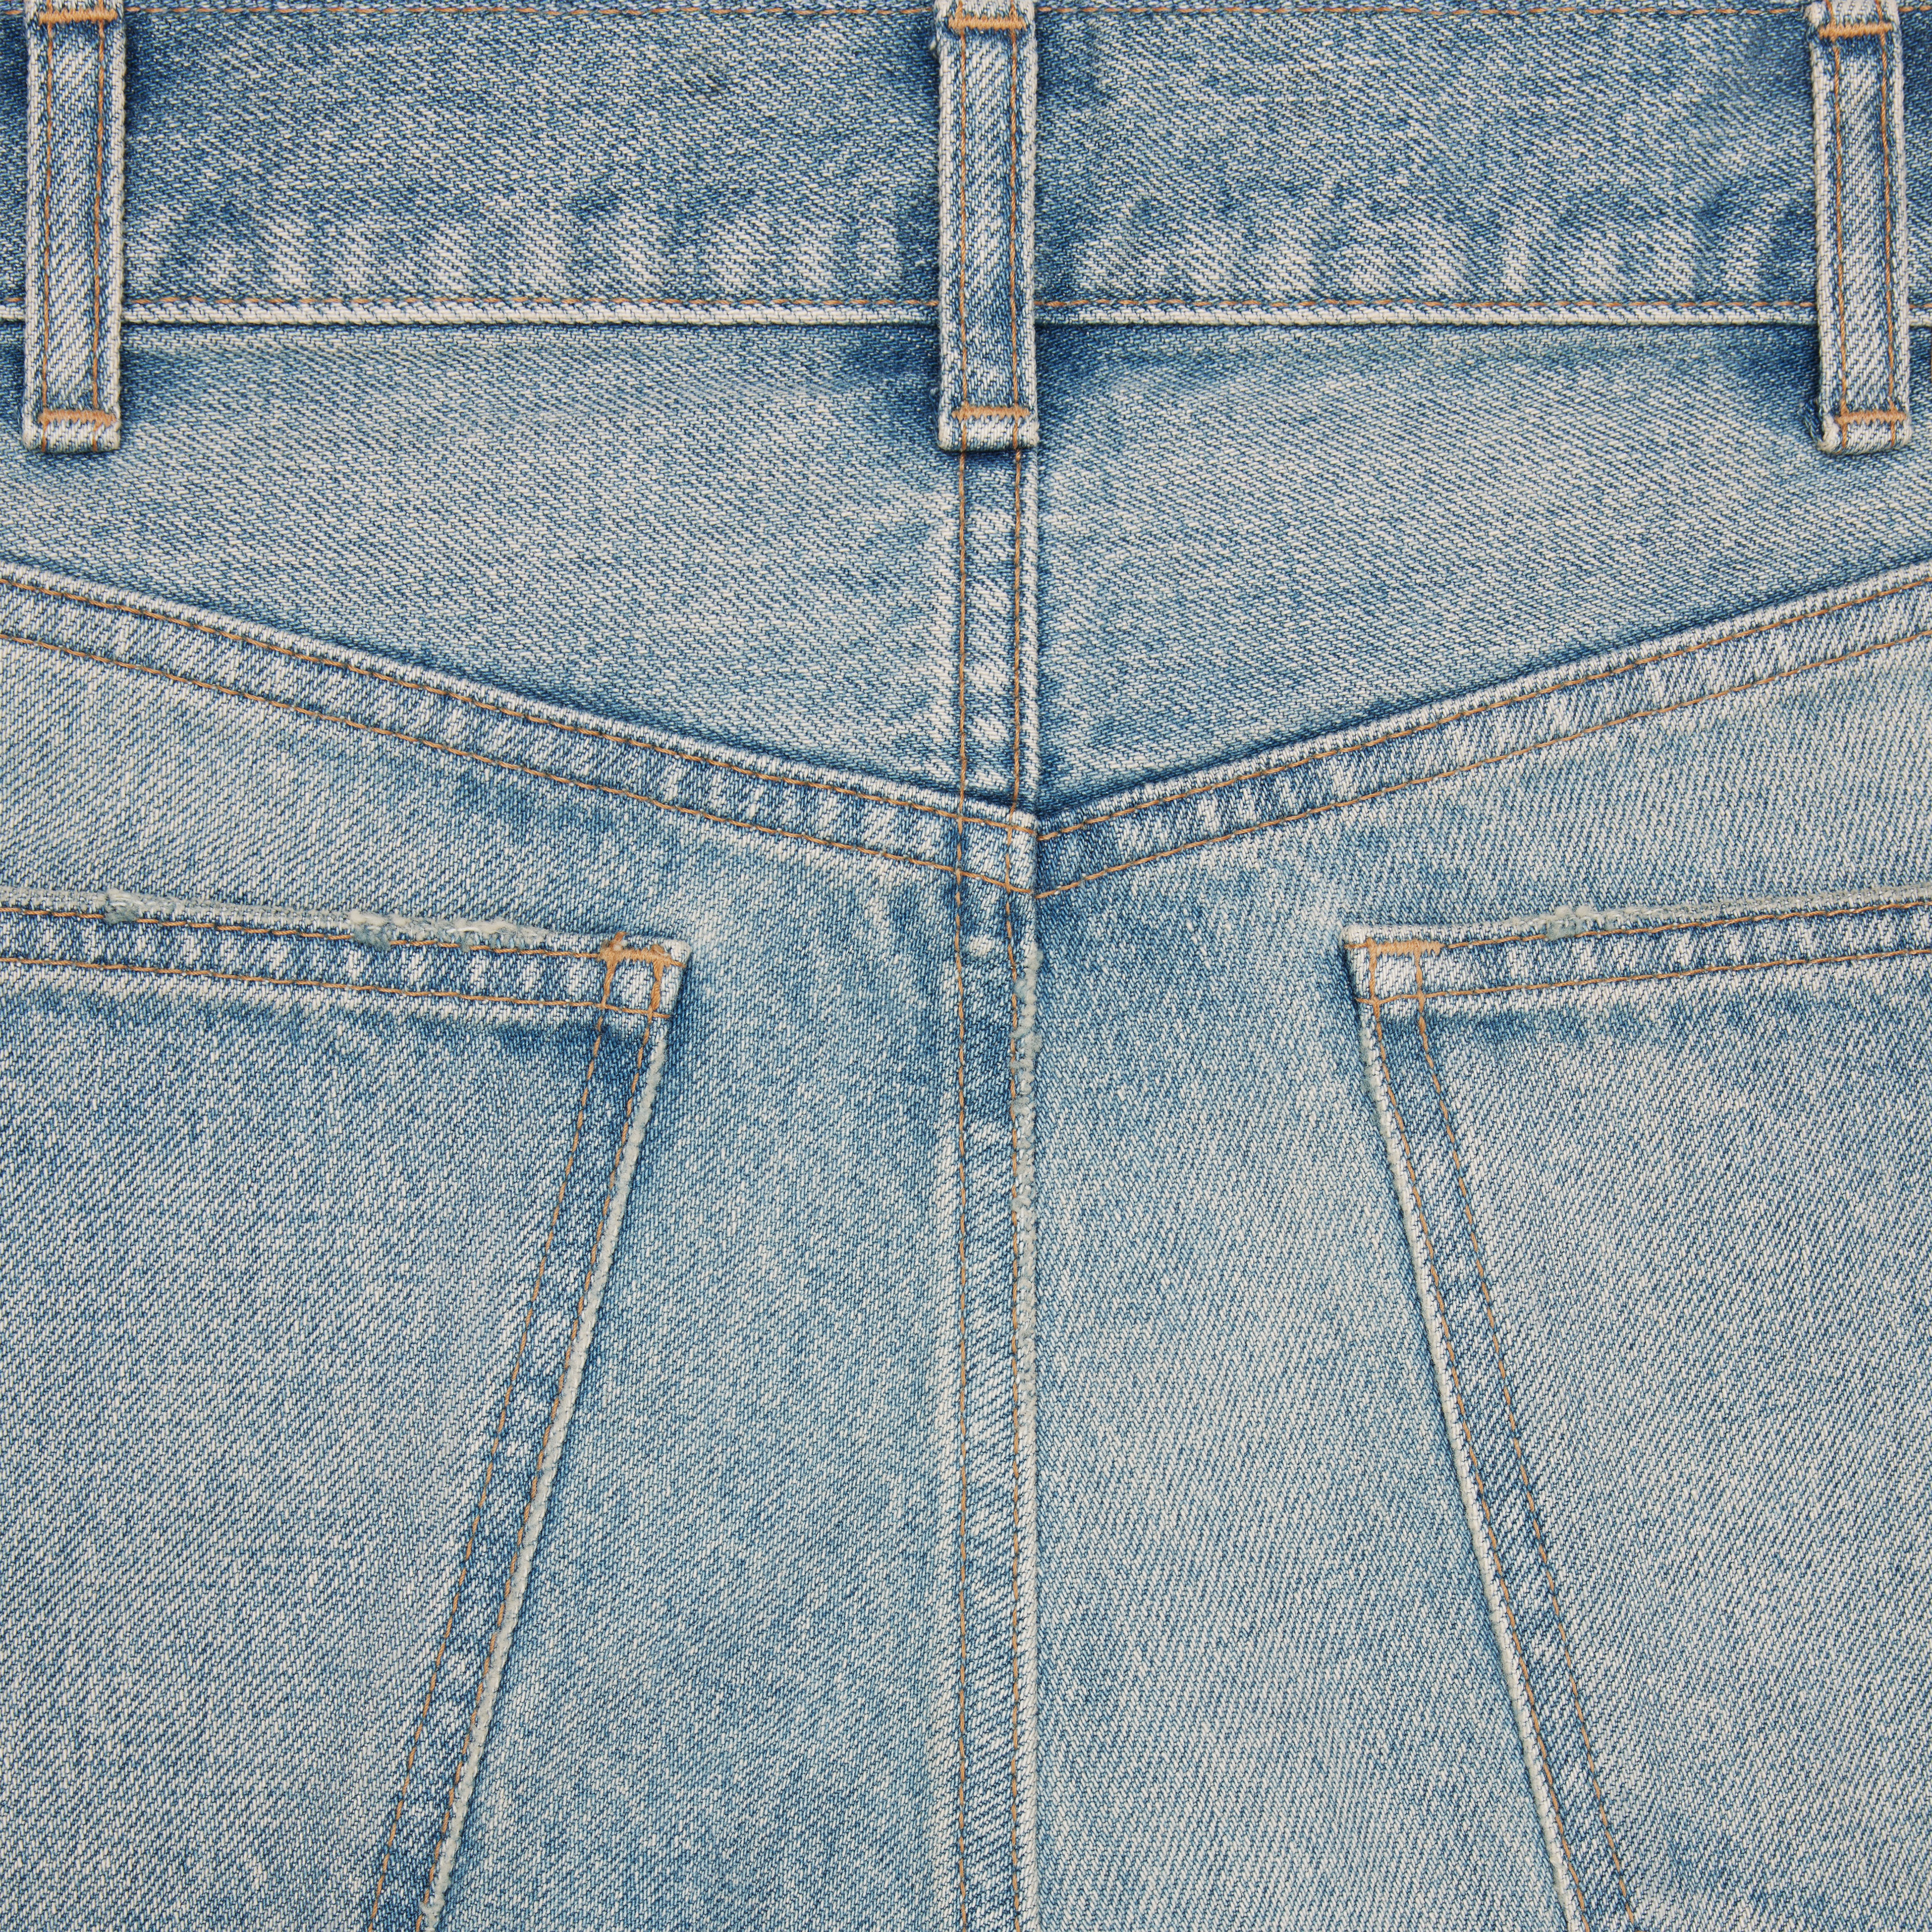 kurt jeans in destroyed westside wash denim - 3